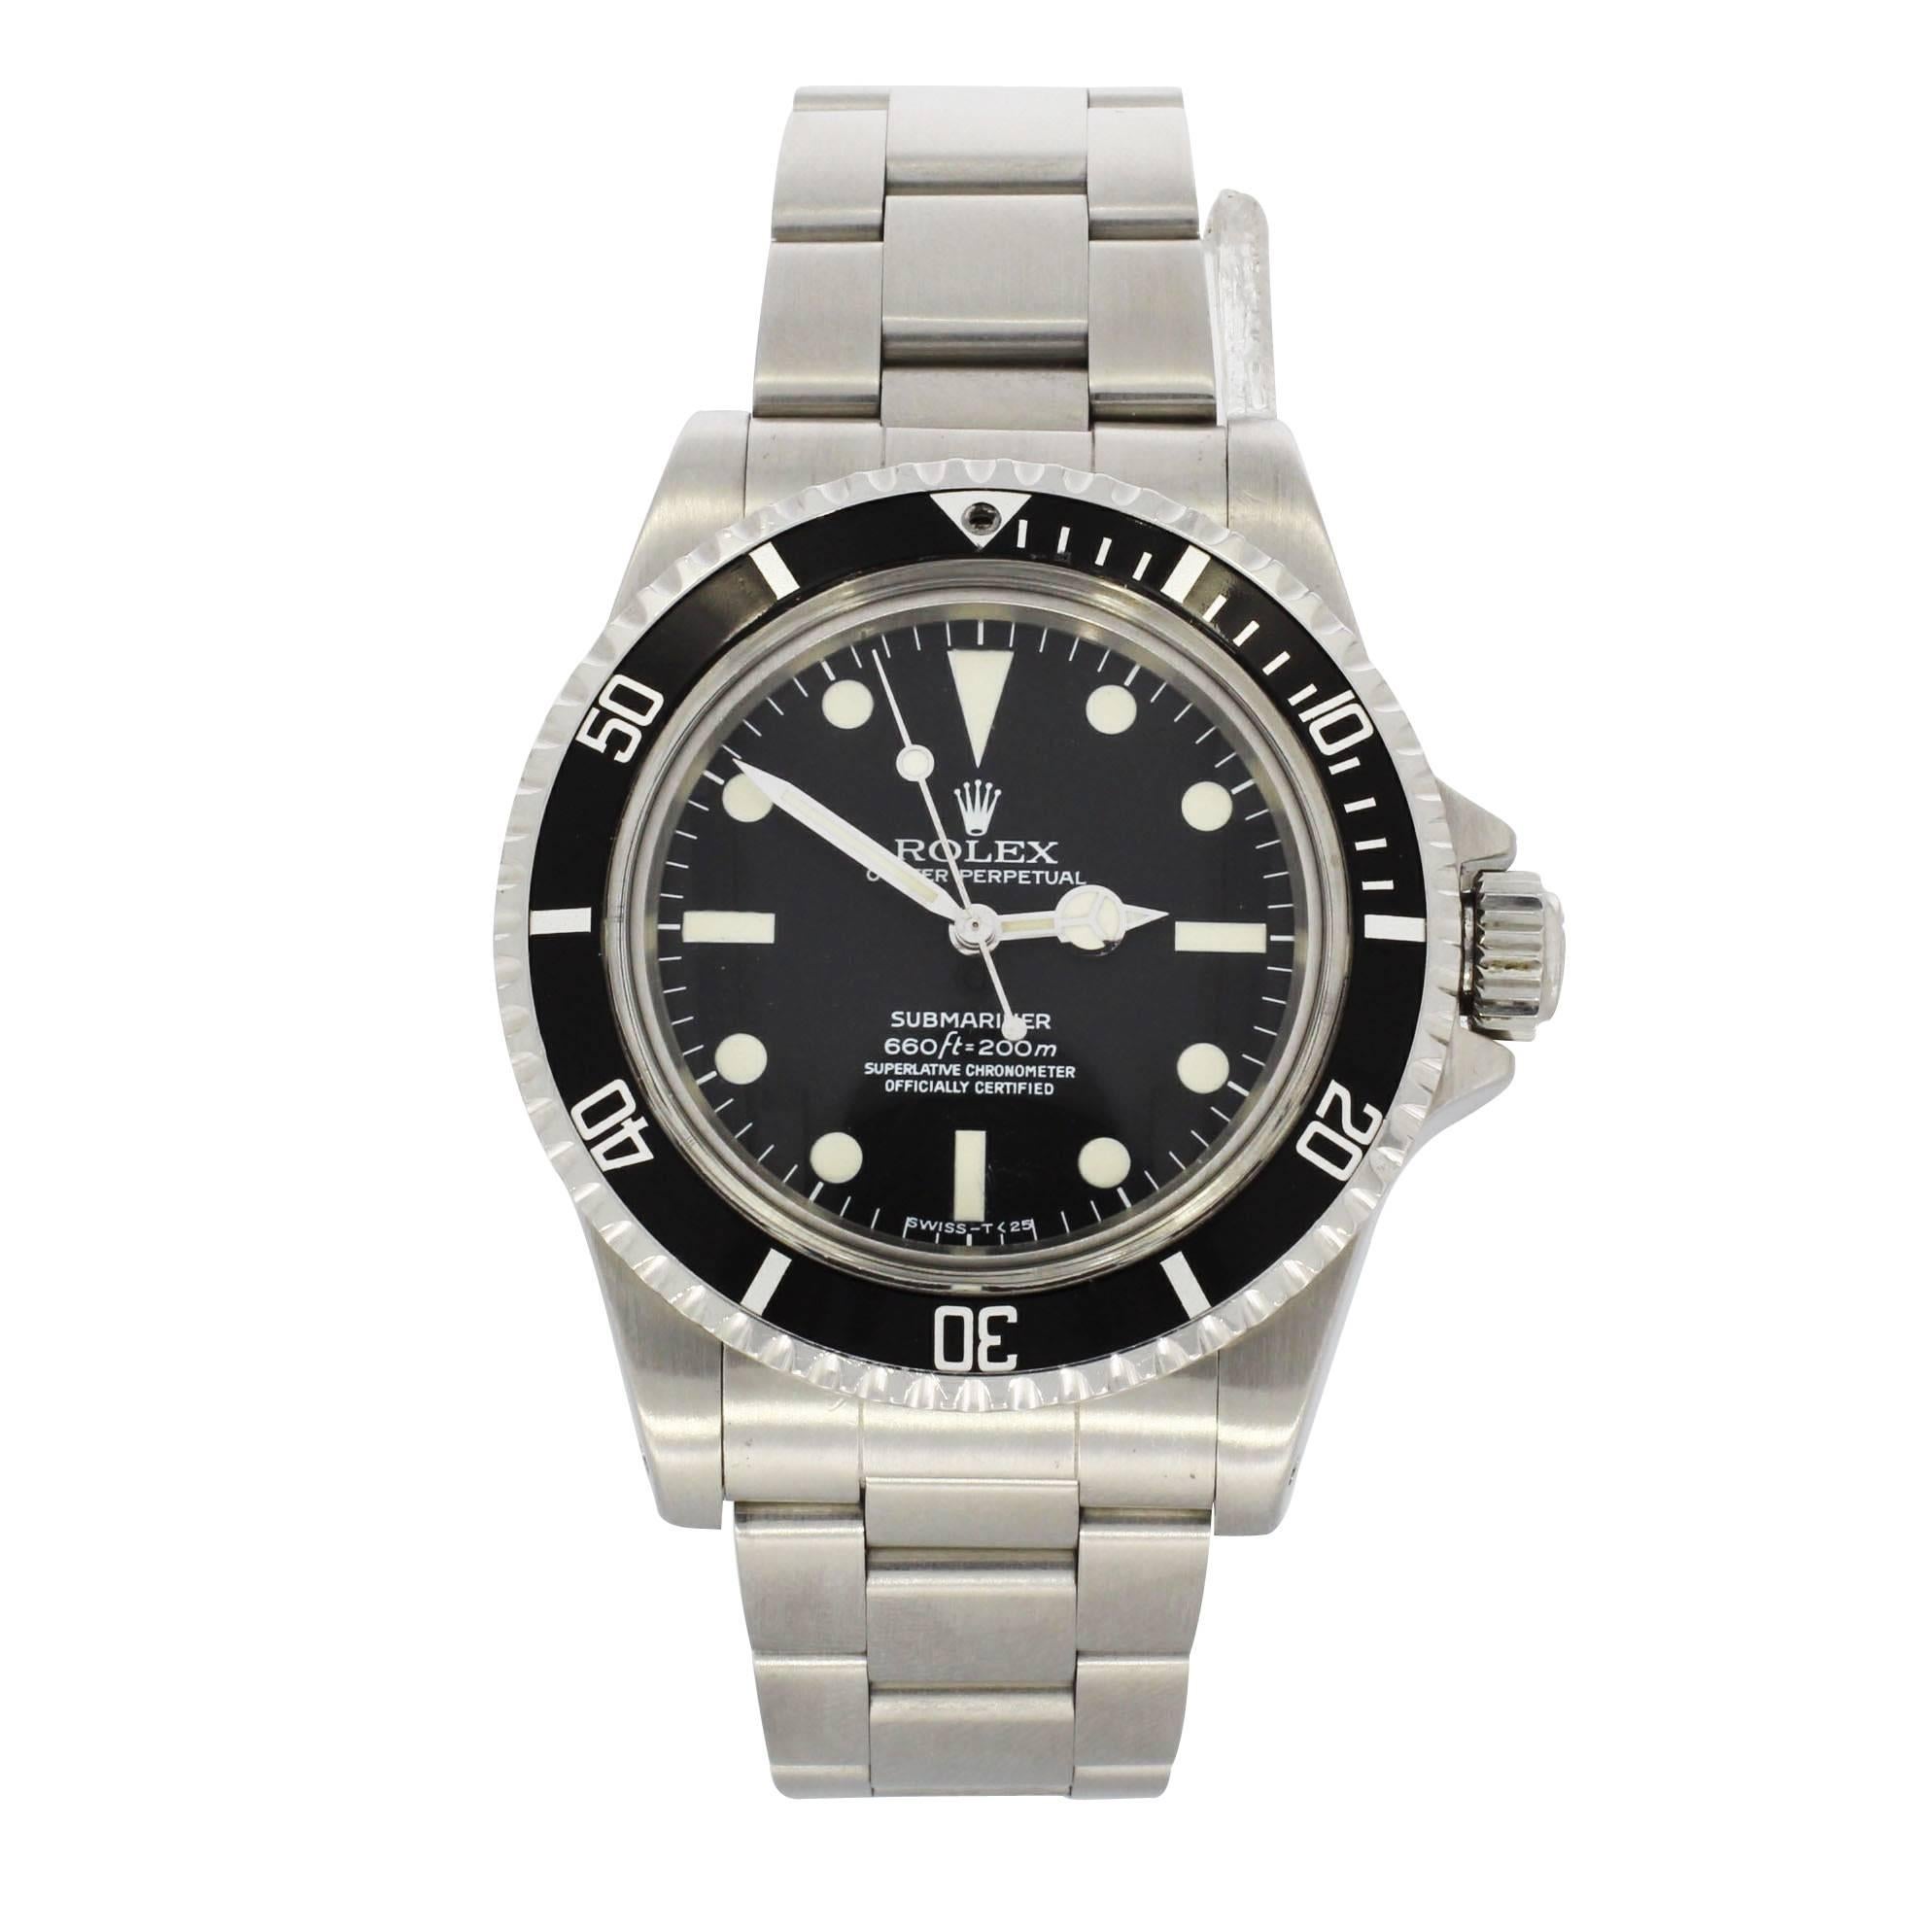 Rolex Stainless Steel Submariner Original Dial Wristwatch Ref 5512 For Sale